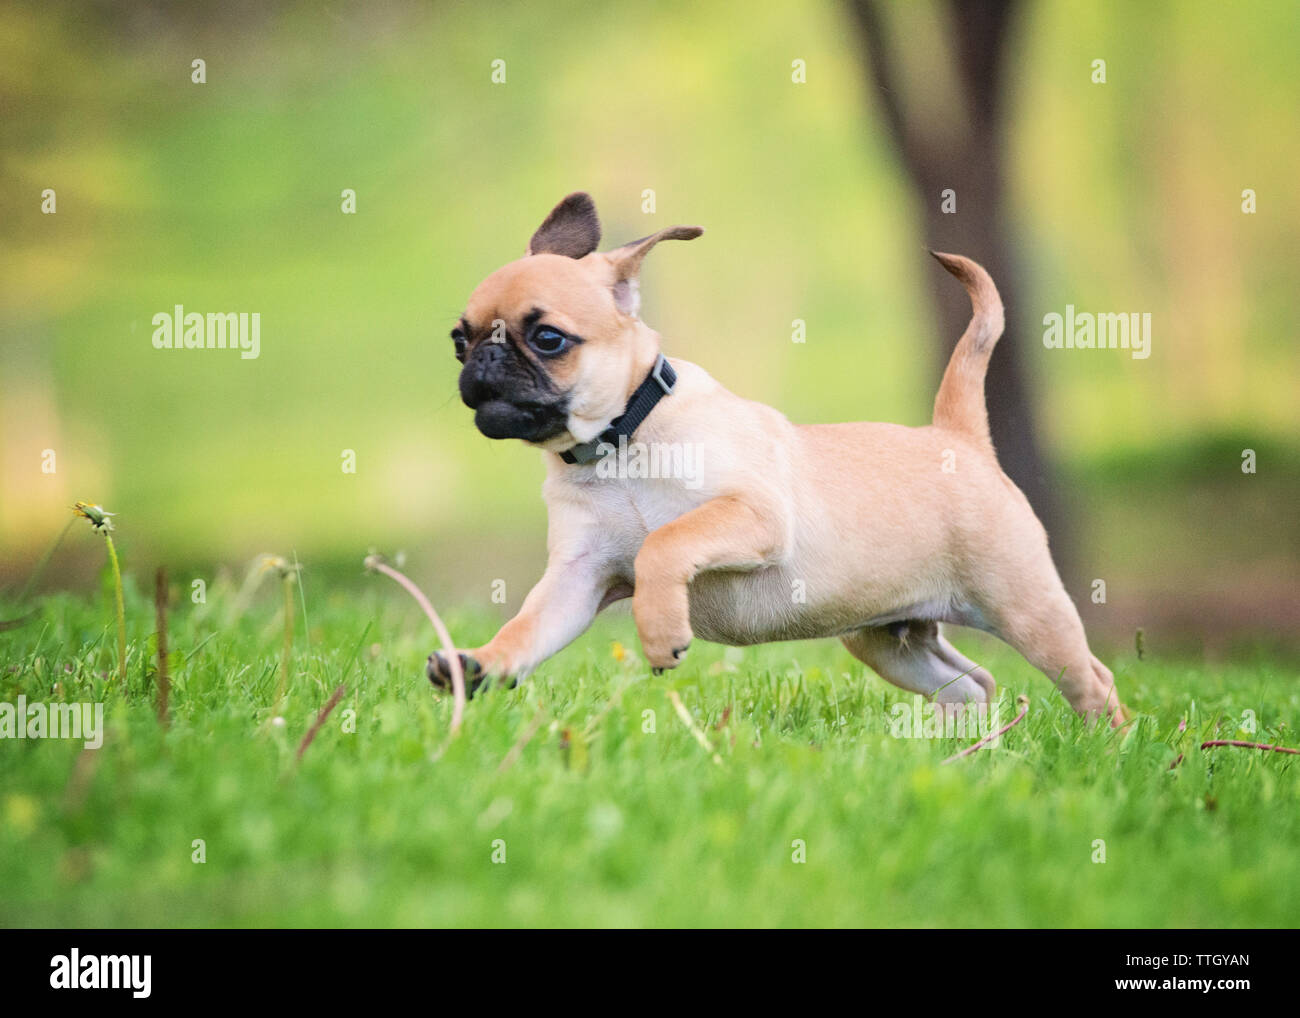 Pug running on grassy field at park Stock Photo